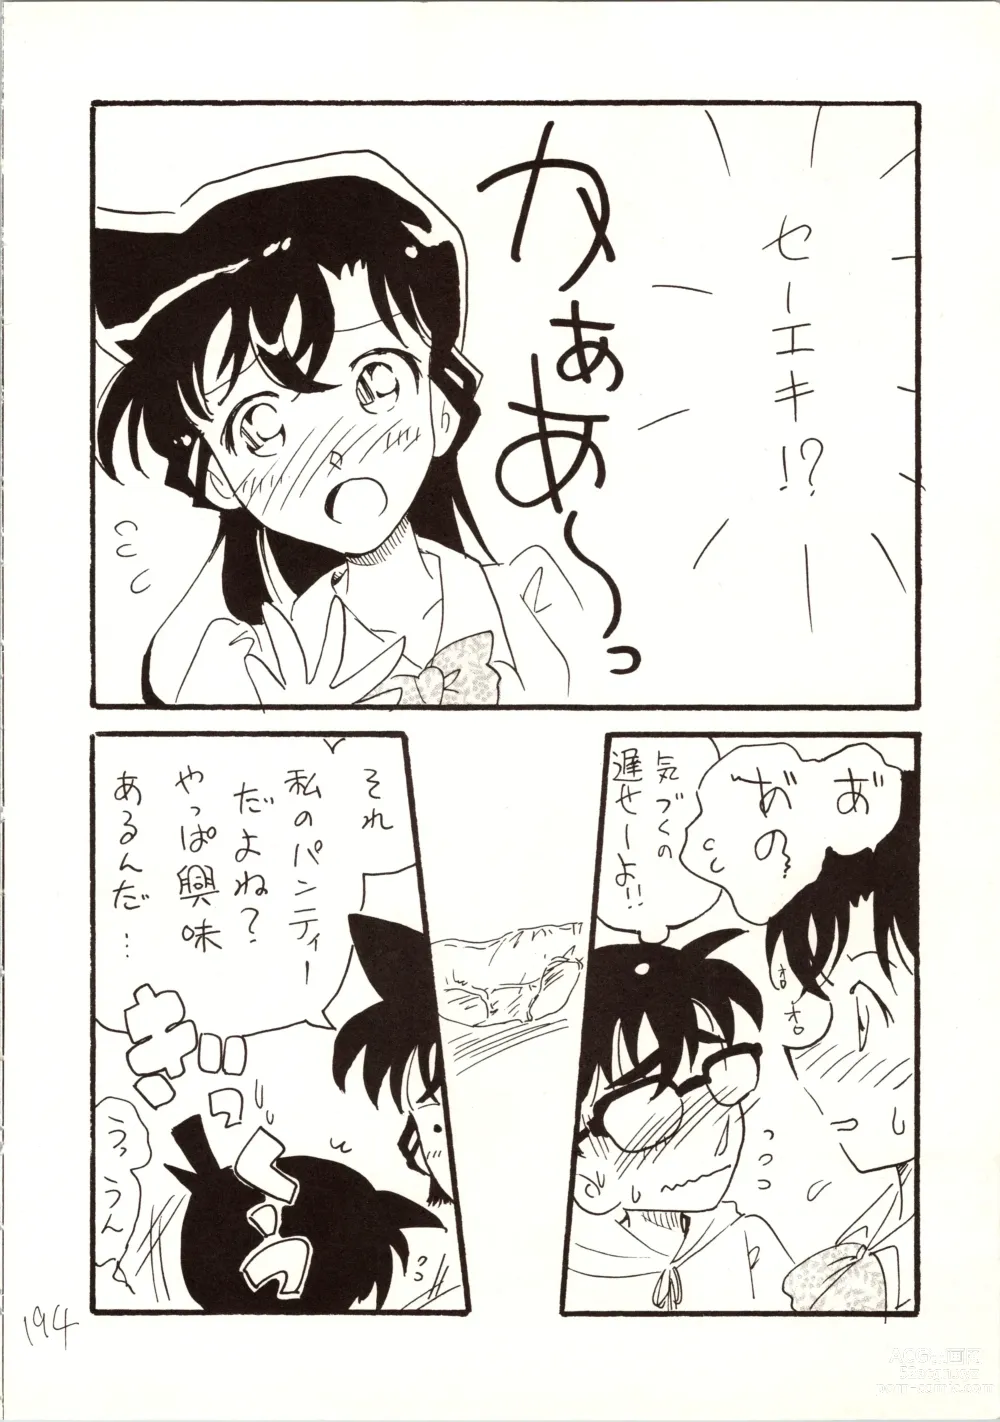 Page 194 of doujinshi Meitantei DX